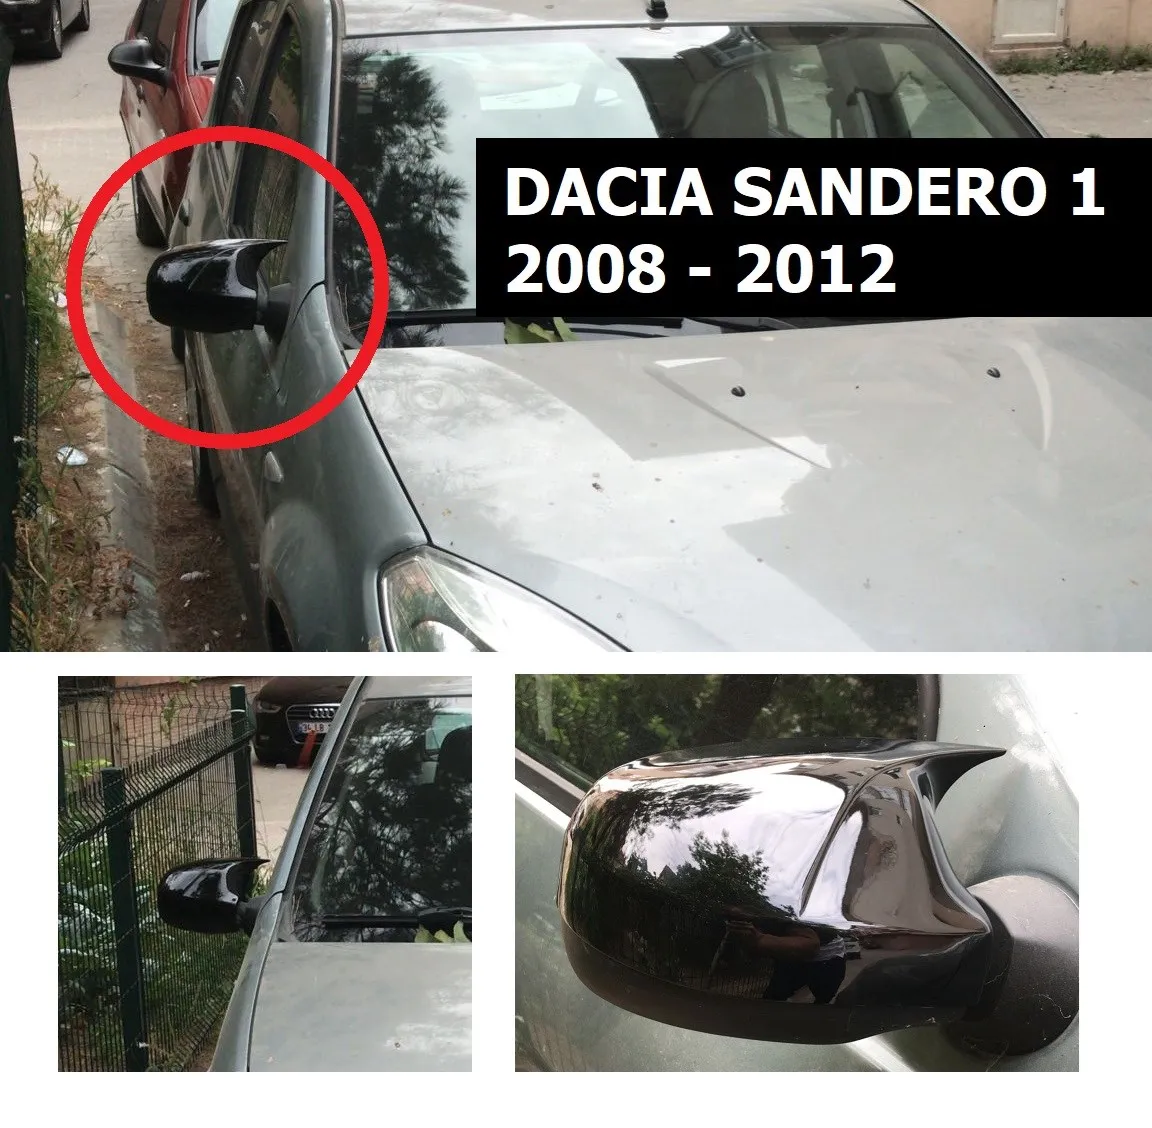 

Bat Style Mirror Cover For Dacia Sandero, Glossy Black, Piano Black, Left & Right, High Quality, 2008 2009 2010 2011